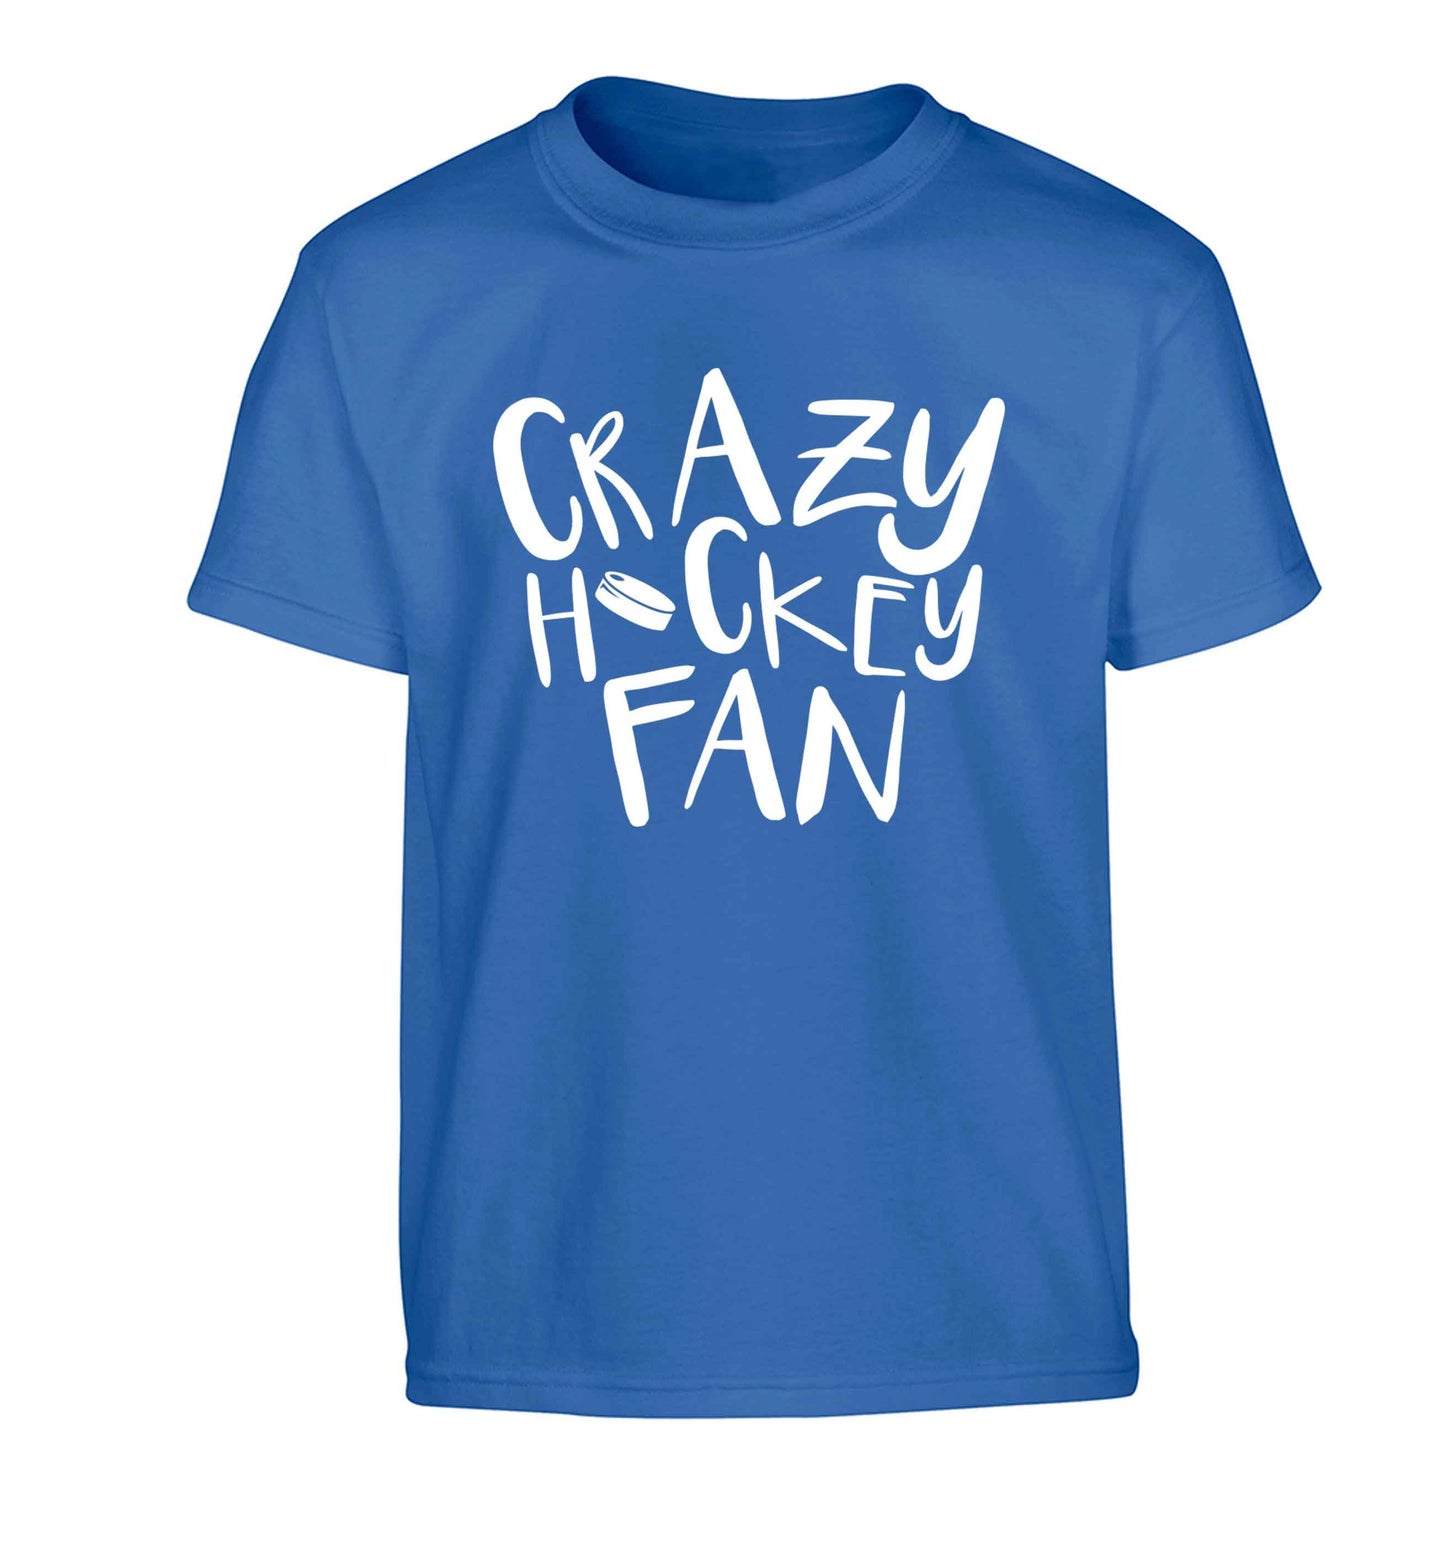 Crazy hockey fan Children's blue Tshirt 12-13 Years